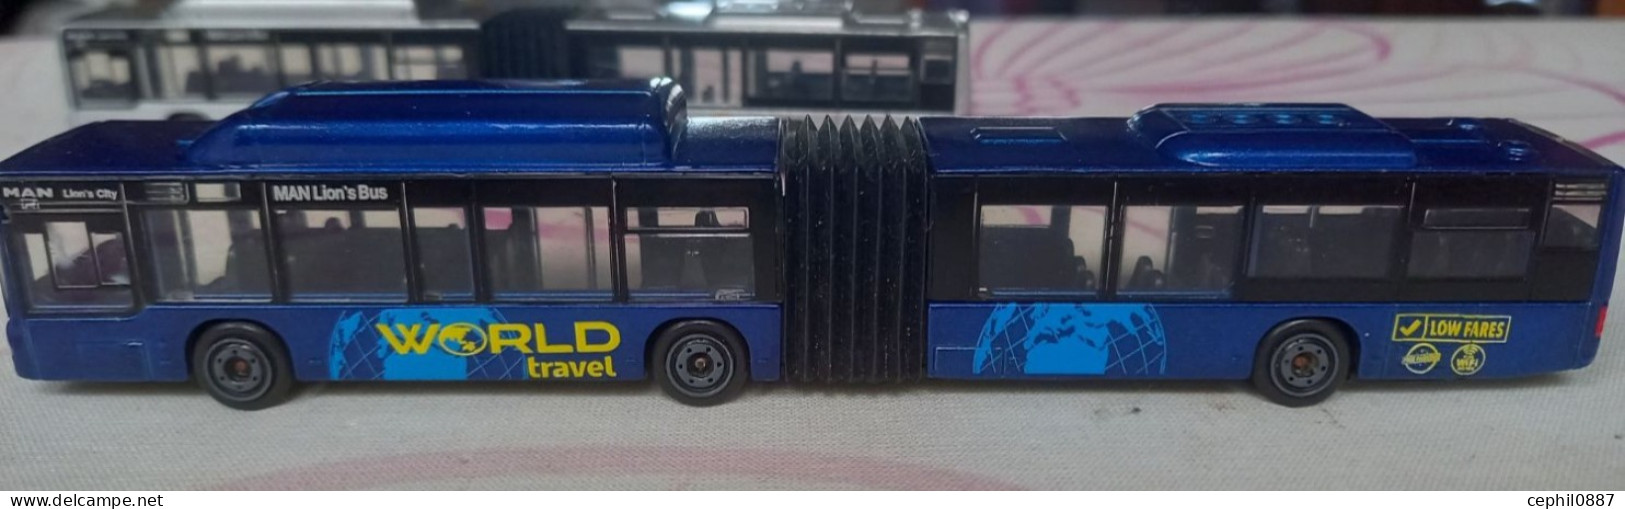 MAJORETTE: Double Bus MAN WORLD TRAVEL 1/110 - Trucks, Buses & Construction